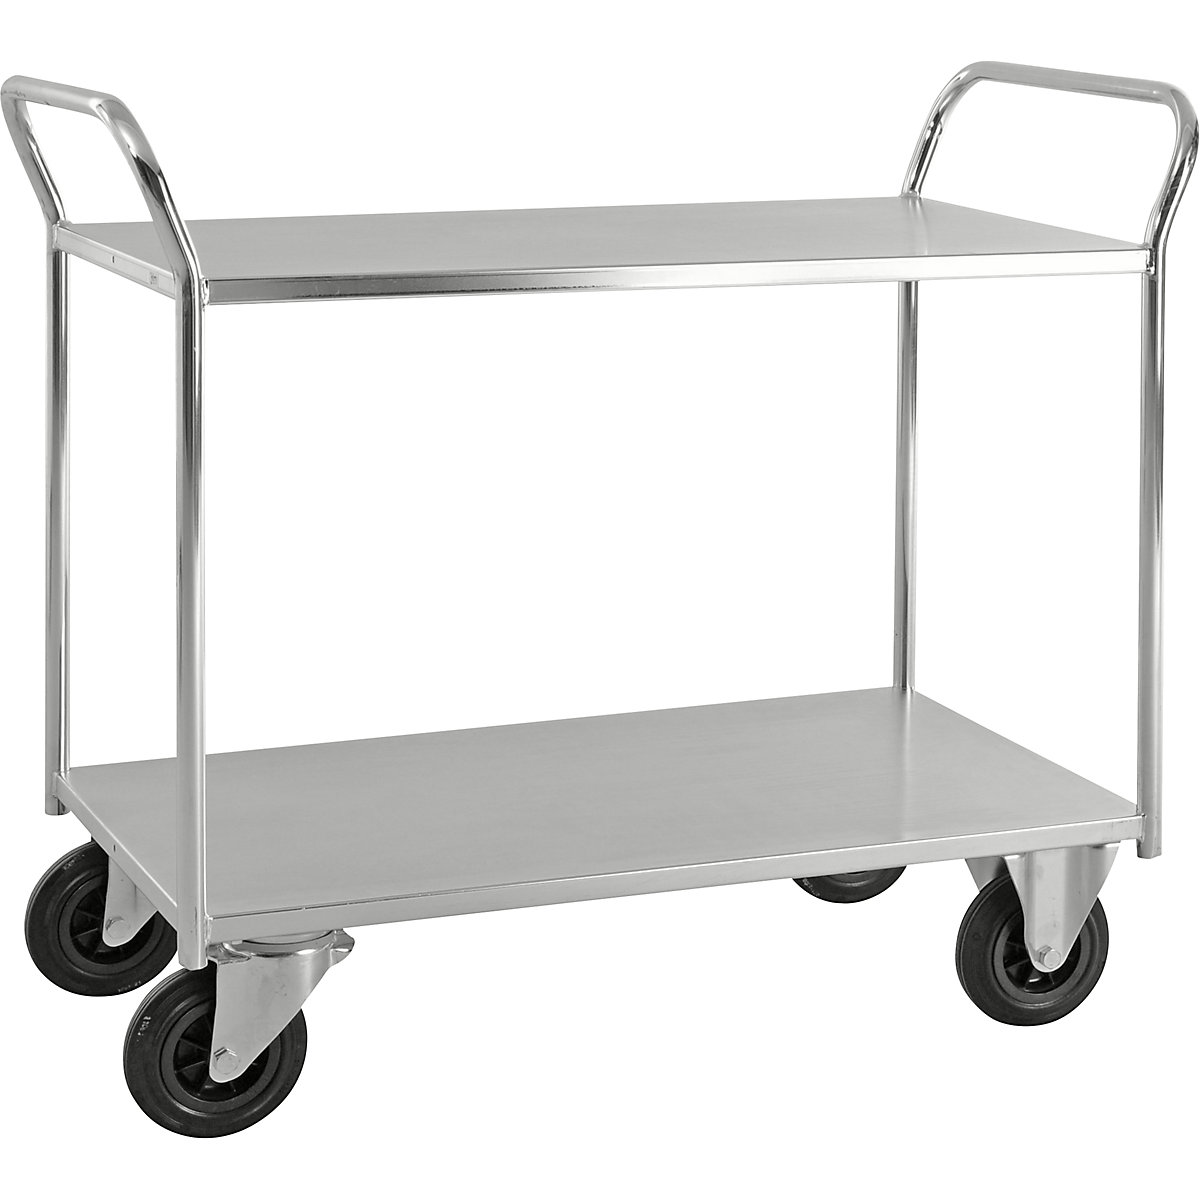 KM41 table trolley – Kongamek, 2 shelves, LxWxH 1070 x 550 x 1000 mm, zinc plated, 2 swivel castors and 2 fixed castors, 5+ items-4